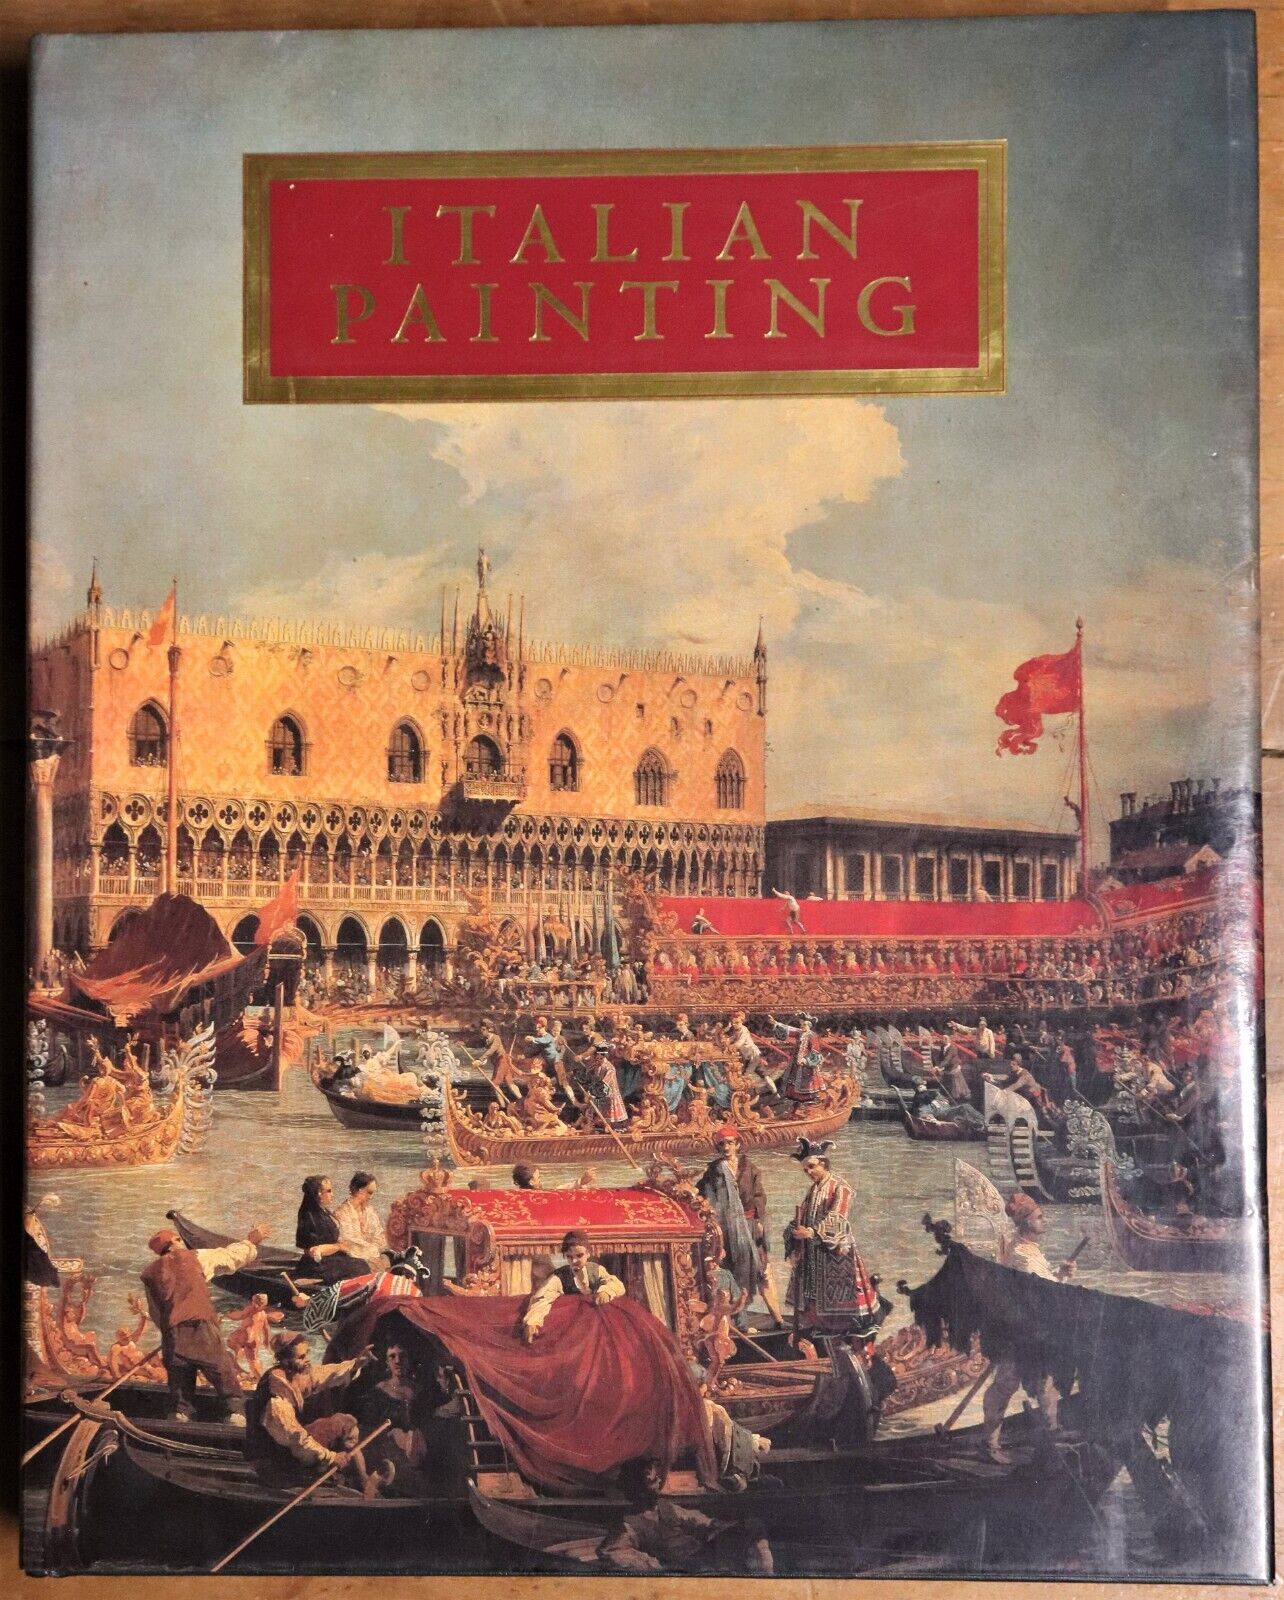 Italian Painting by K Christiansen - 1992 - Large Print Classic Art Book